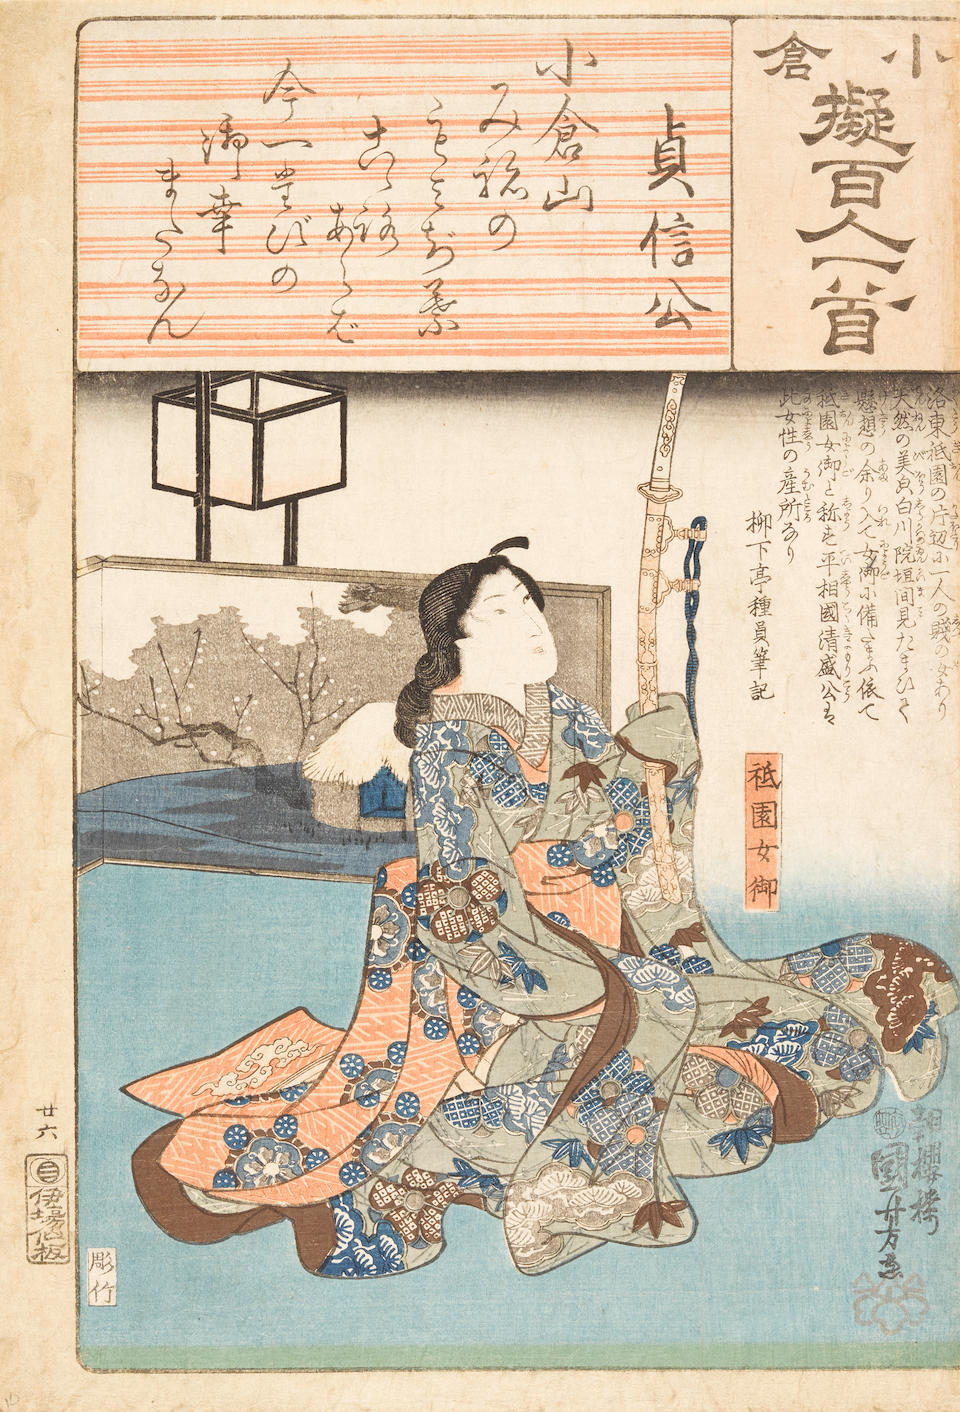 Utagawa Hiroshige I (1797-1858), Utagawa Kuniyoshi (1797-1861) and Utagawa Kuniteru II (Kunitsuna II) (1830-1874) Edo period (1615-1868), late 19th century